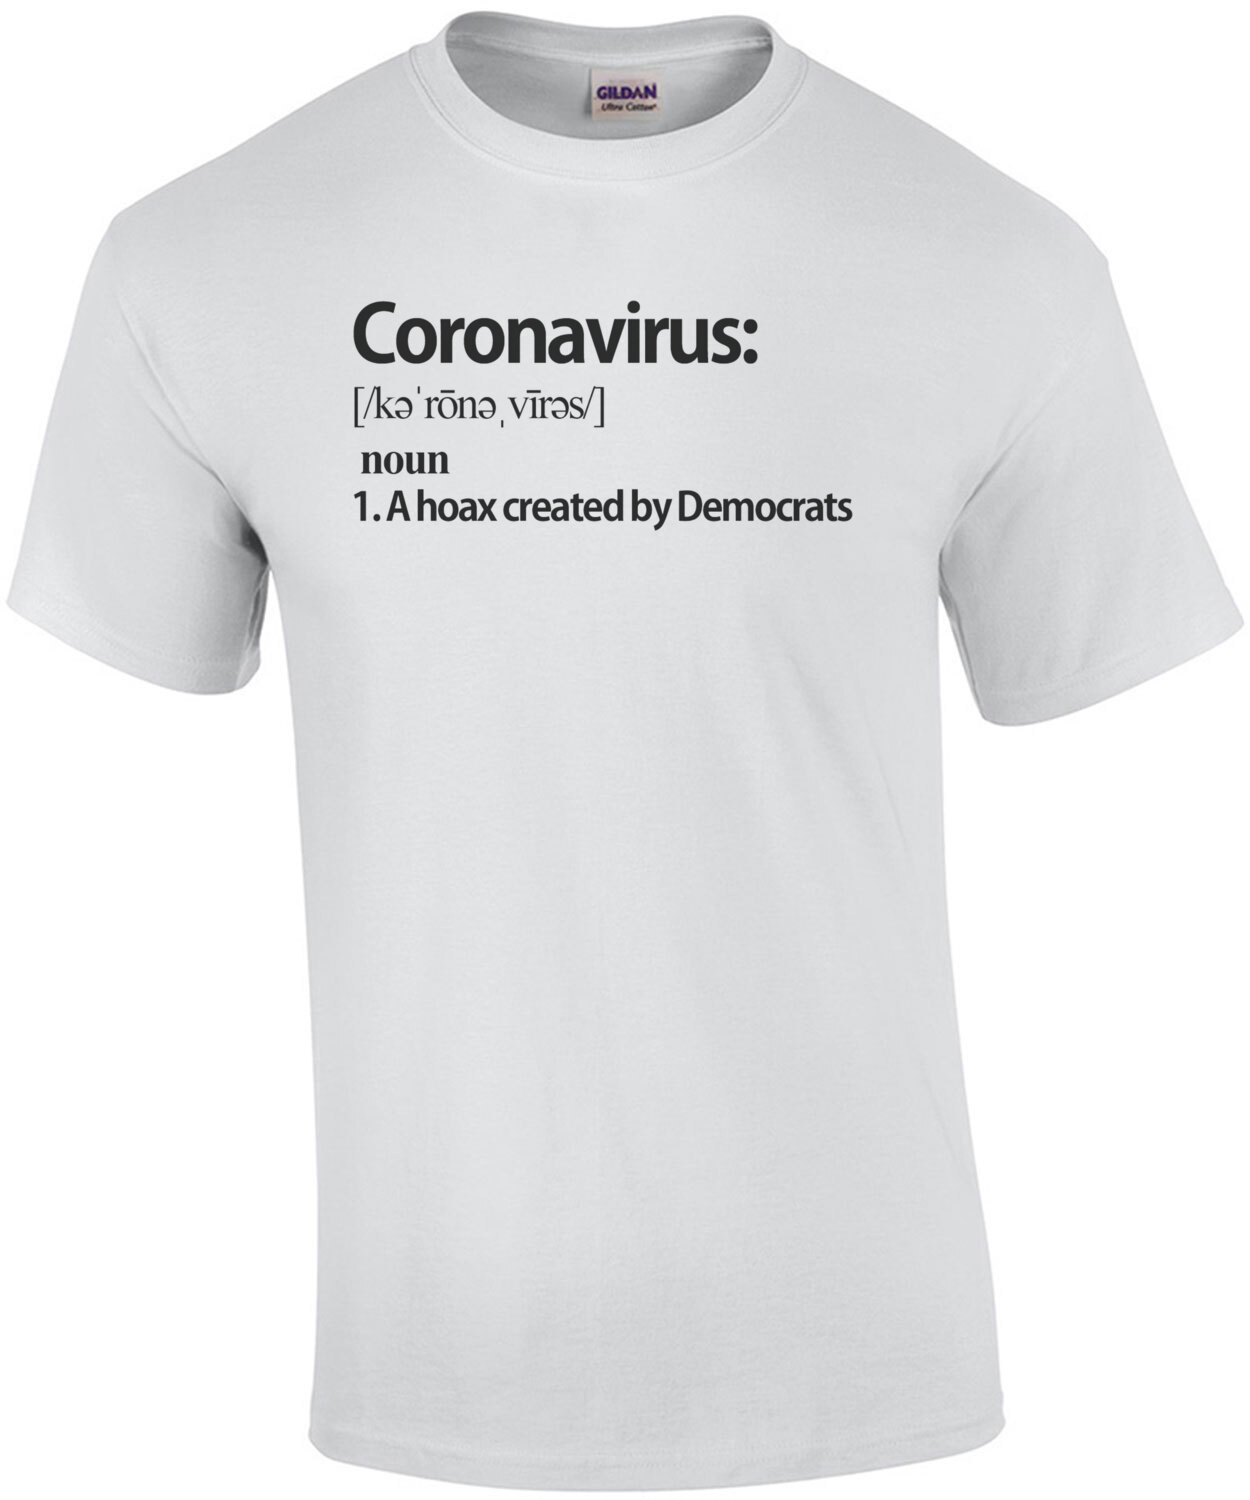 Coronavirus - noun - A hoax created by Democrats - Coronavirus T-Shirt